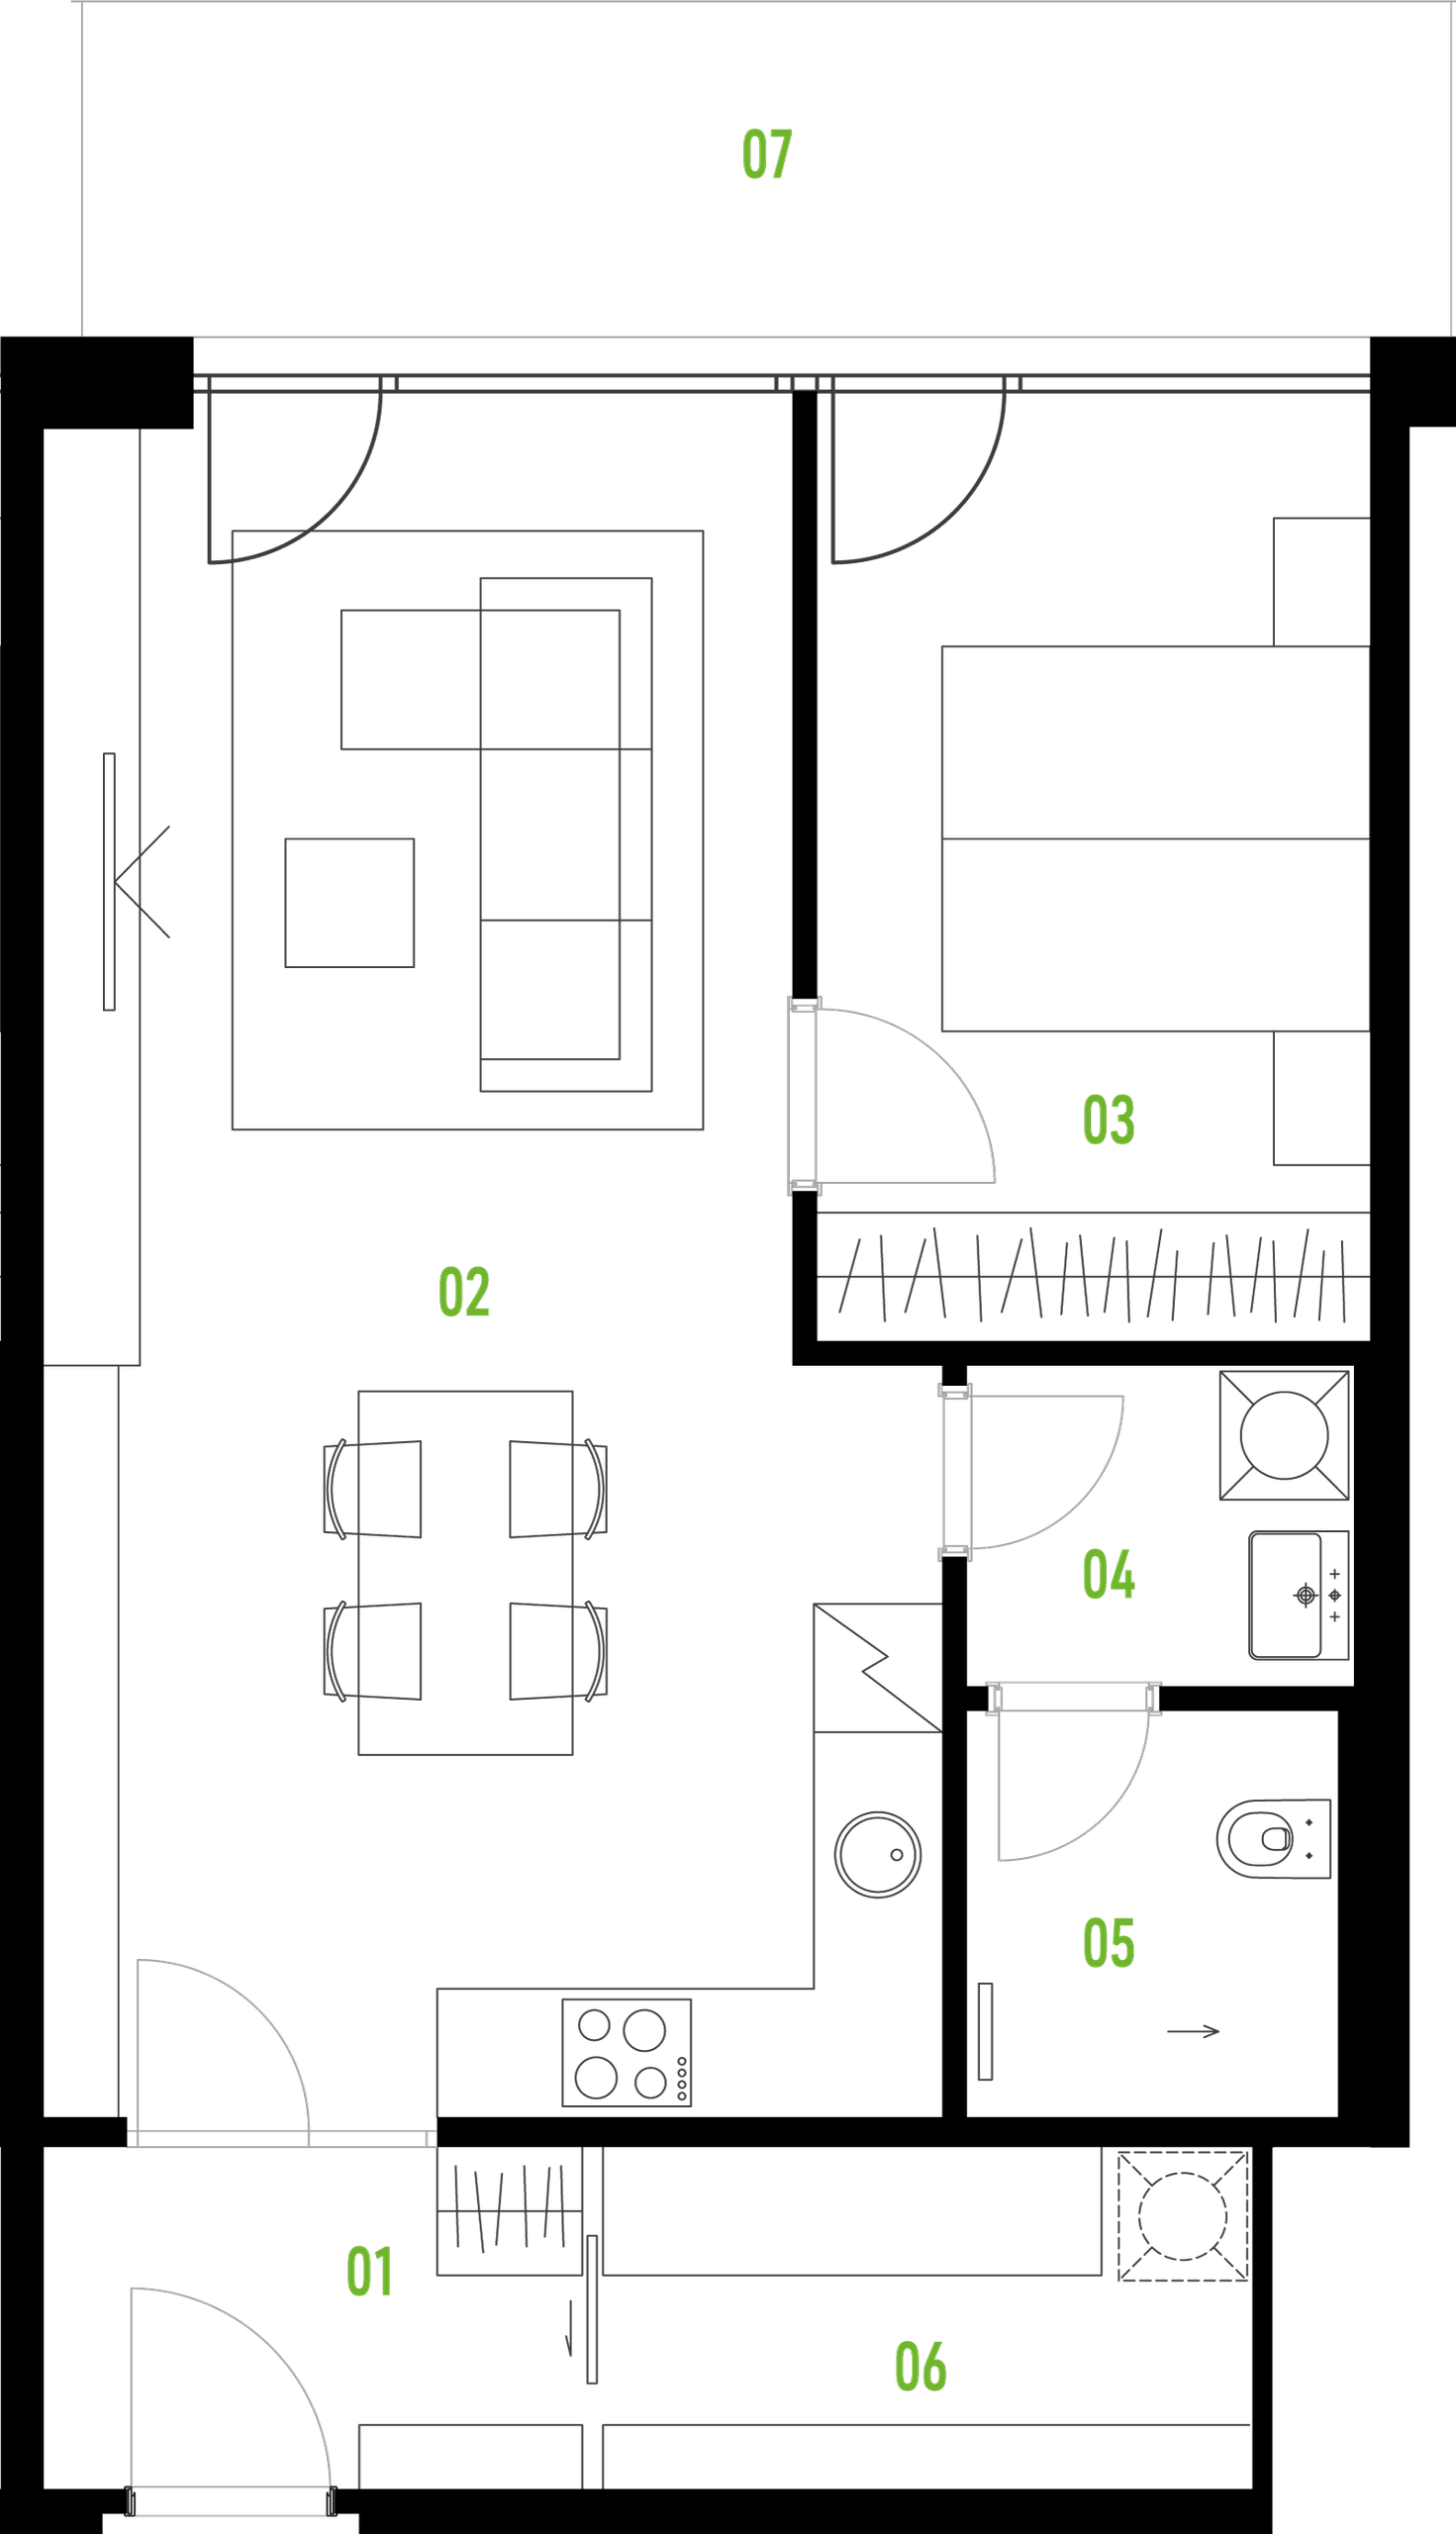 B14 floor plan